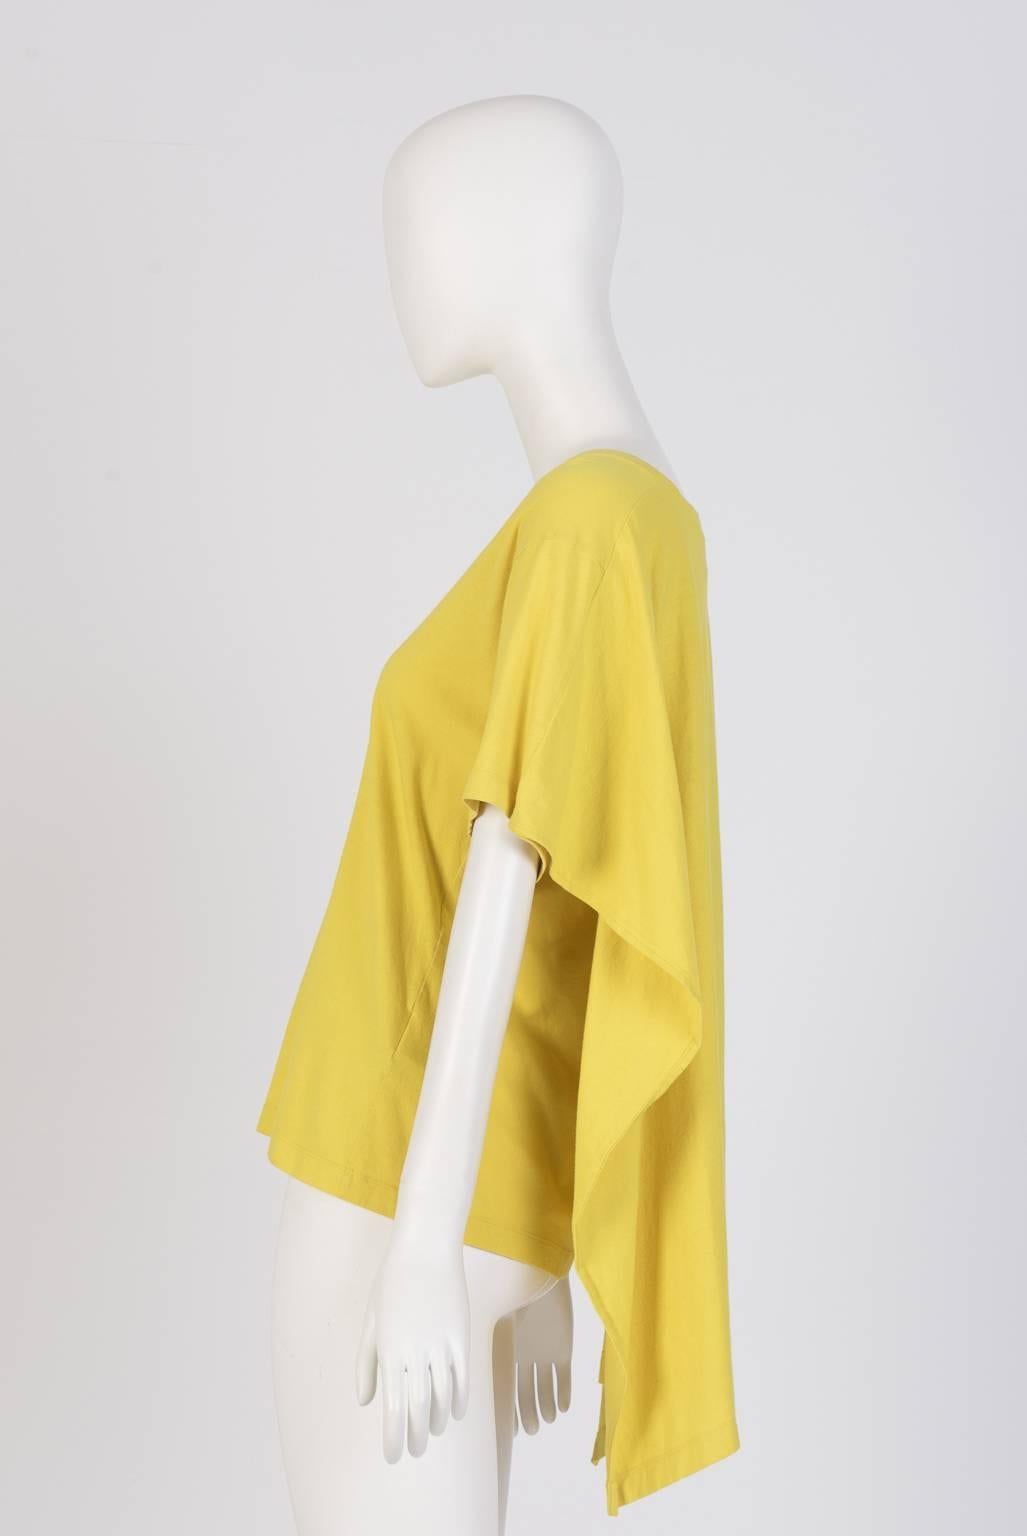 Maison Martin Margiela Yellow Cape T-Shirt In Excellent Condition For Sale In Xiamen, Fujian